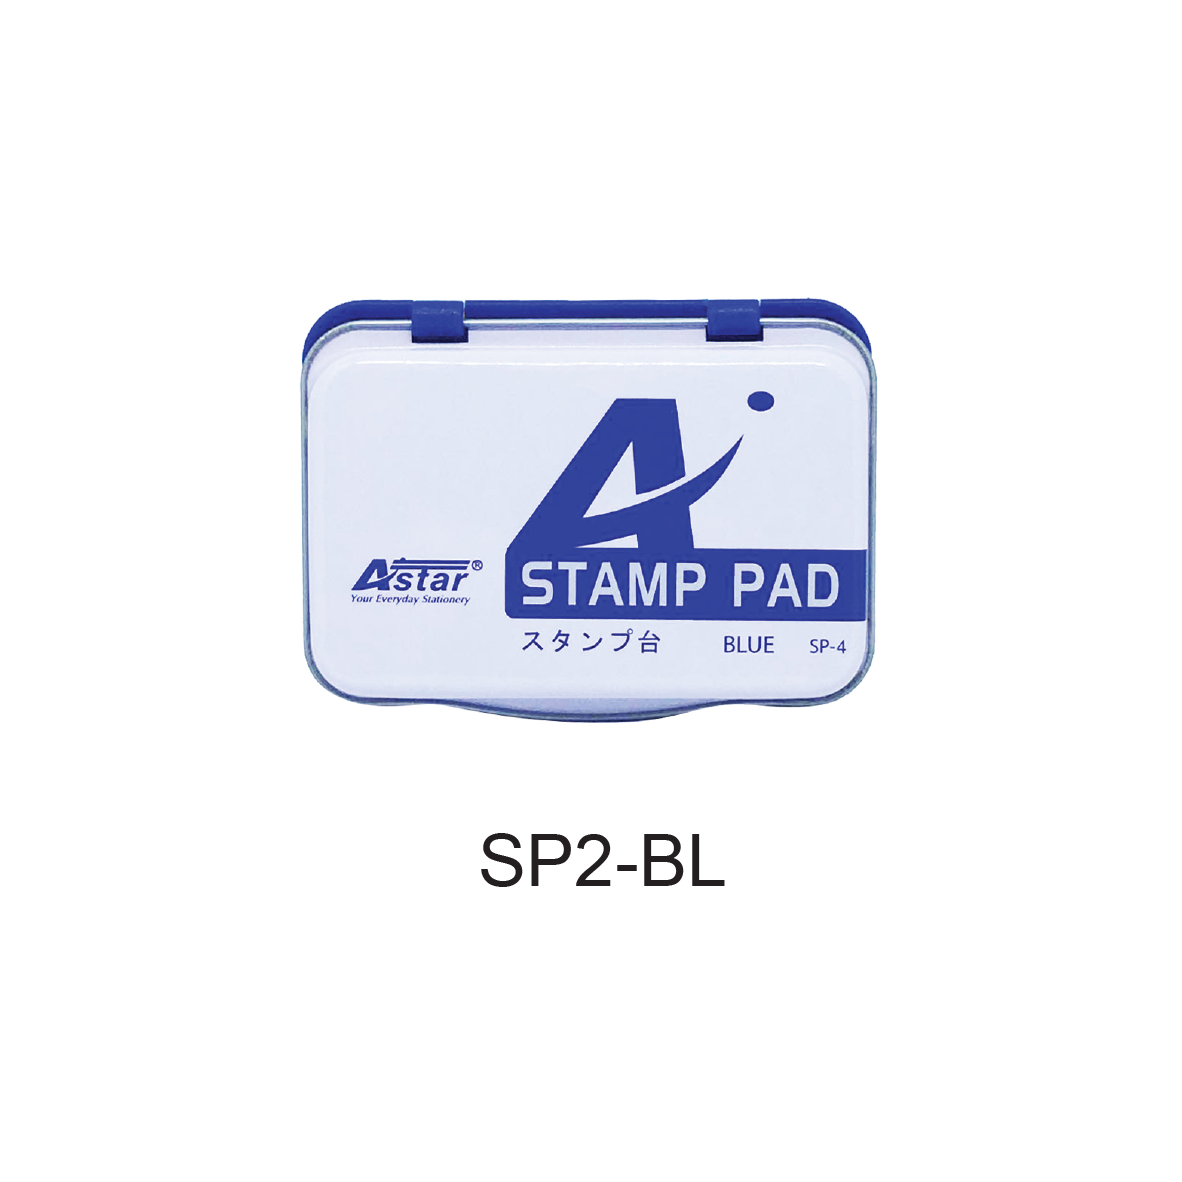 SP4-BL - ASTAR STAMP PAD